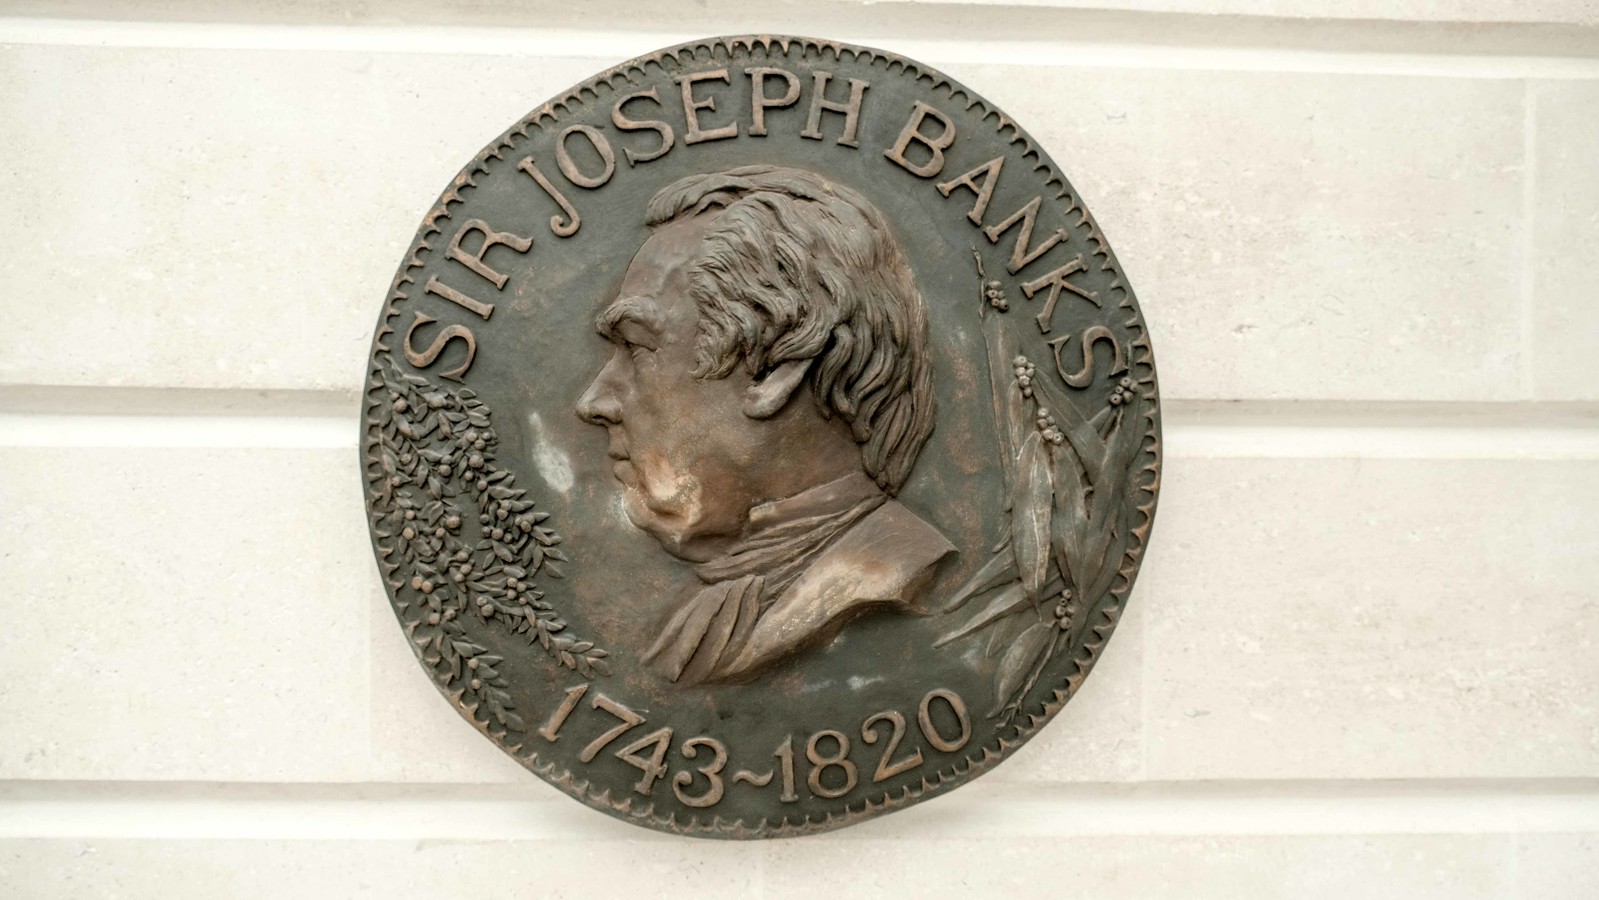 Sir Joseph Banks 1743-1820